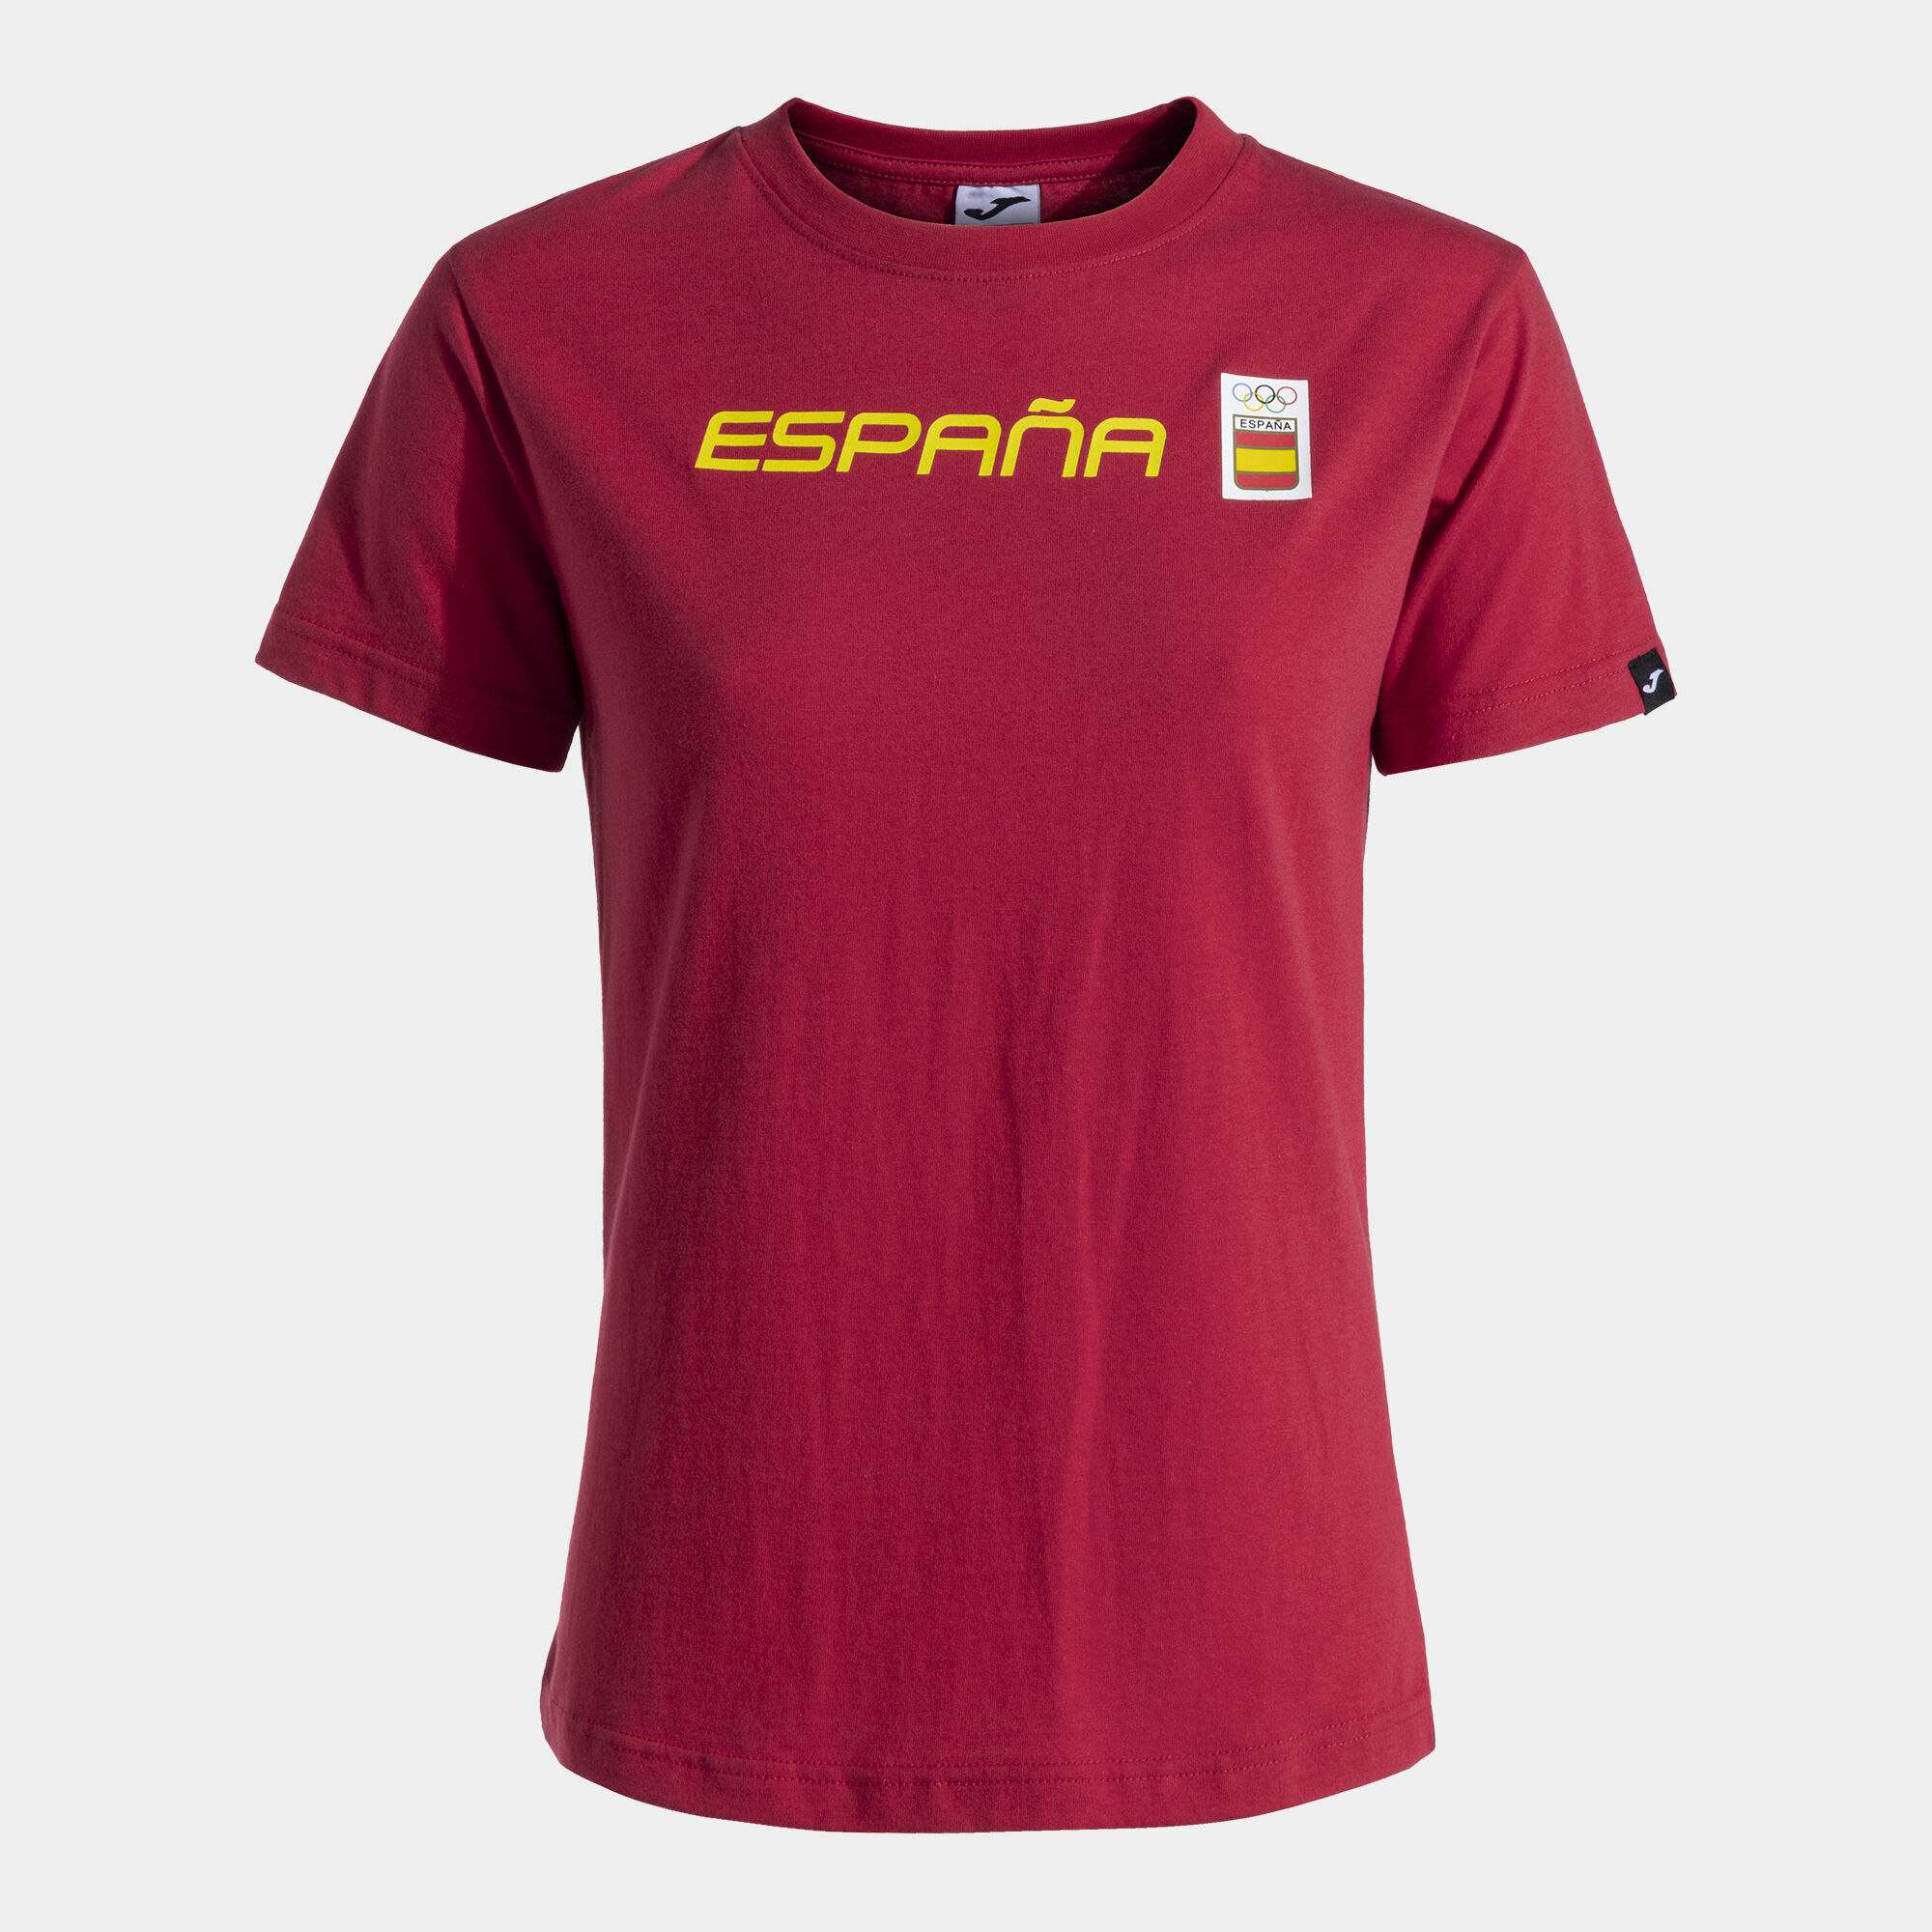 Camiseta manga corta 4ª equipación paseo Comité Olímpico Español mujer